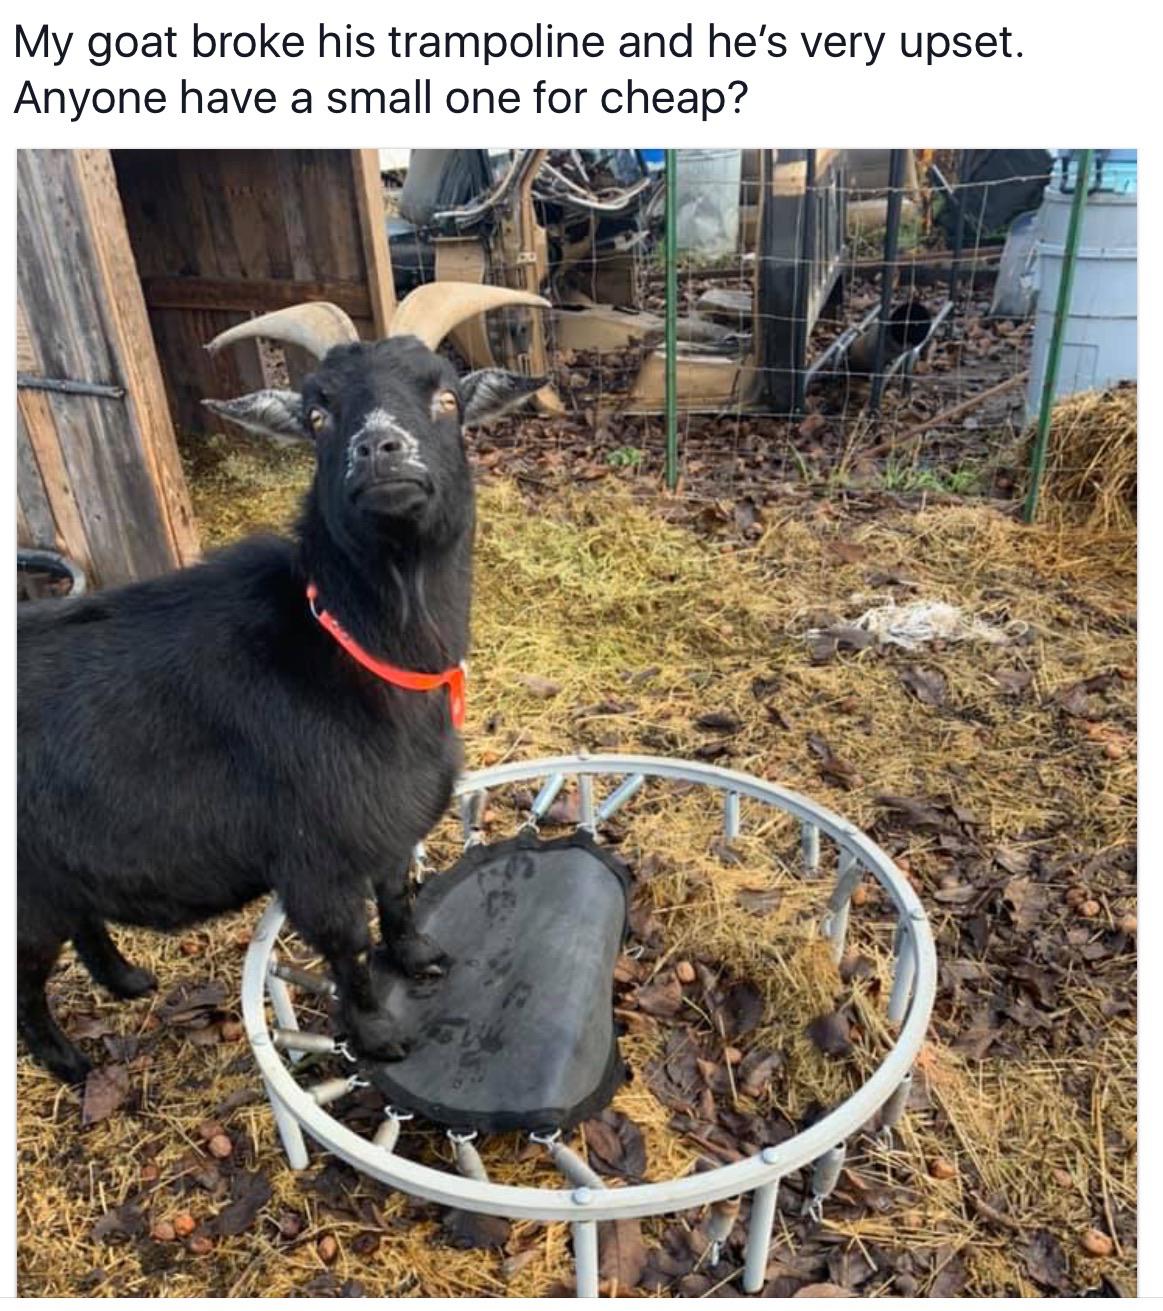 Goat seeking trampoline for romp of a lifetime.